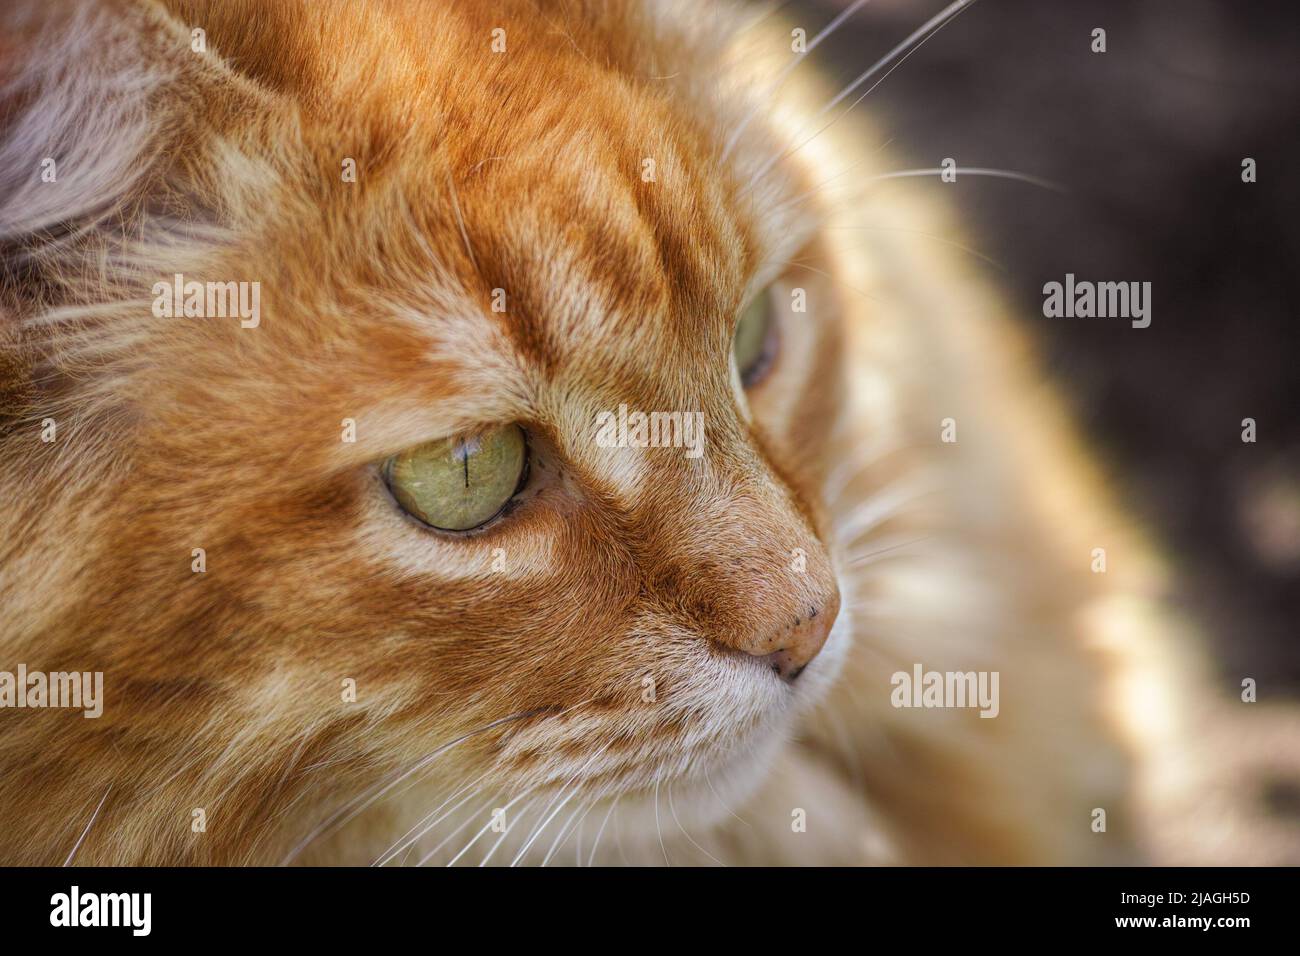 Un retrato de un gato de jengibre mirando a la distancia. Primer plano. Foto de stock